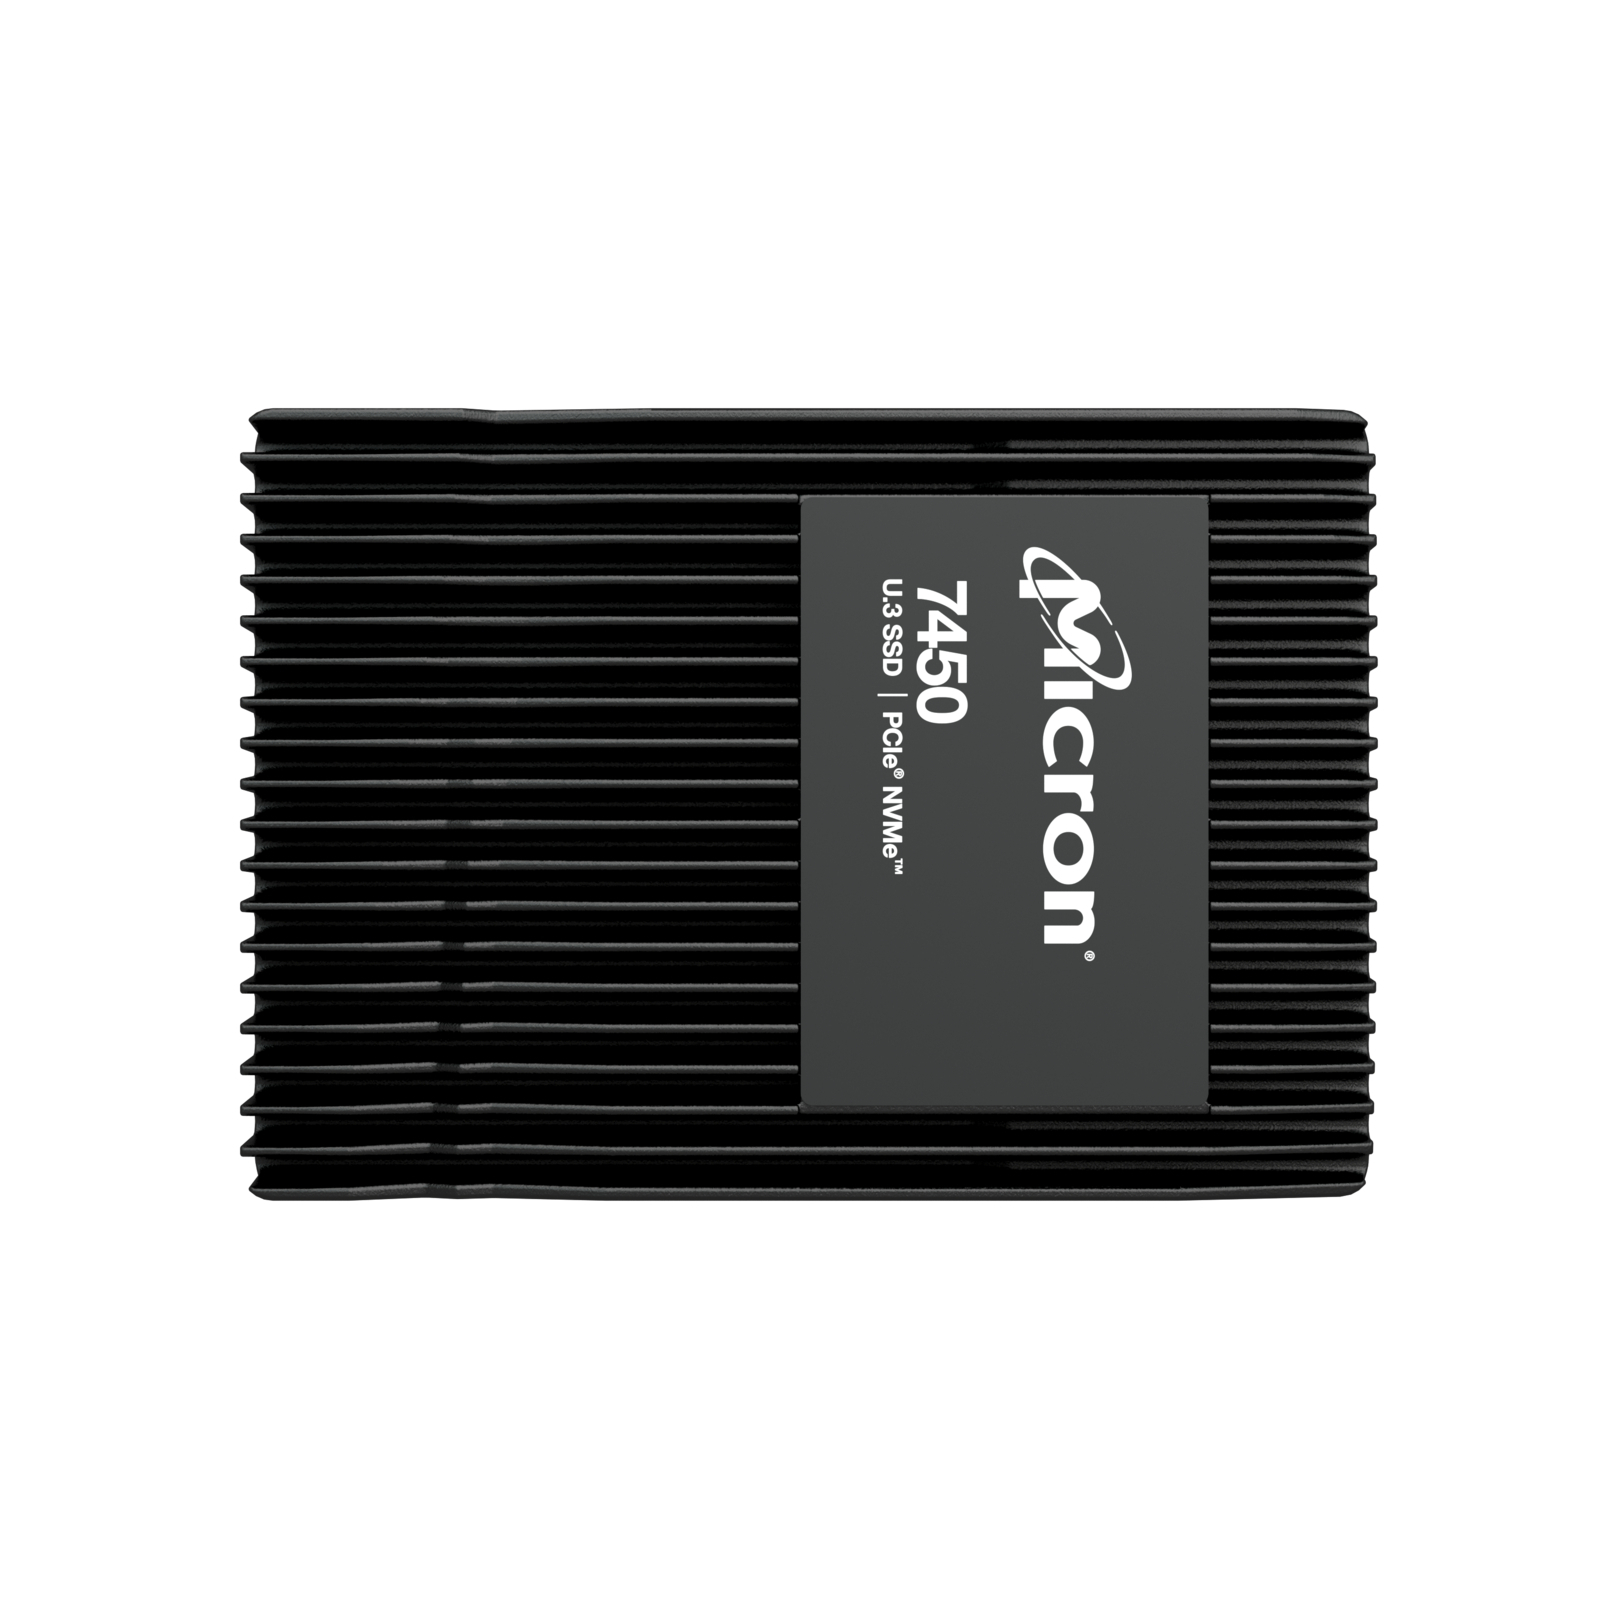 Накопитель SSD U.3 2.5" 1.92TB 7450 PRO 15mm Micron (MTFDKCC1T9TFR-1BC1ZABYYR)